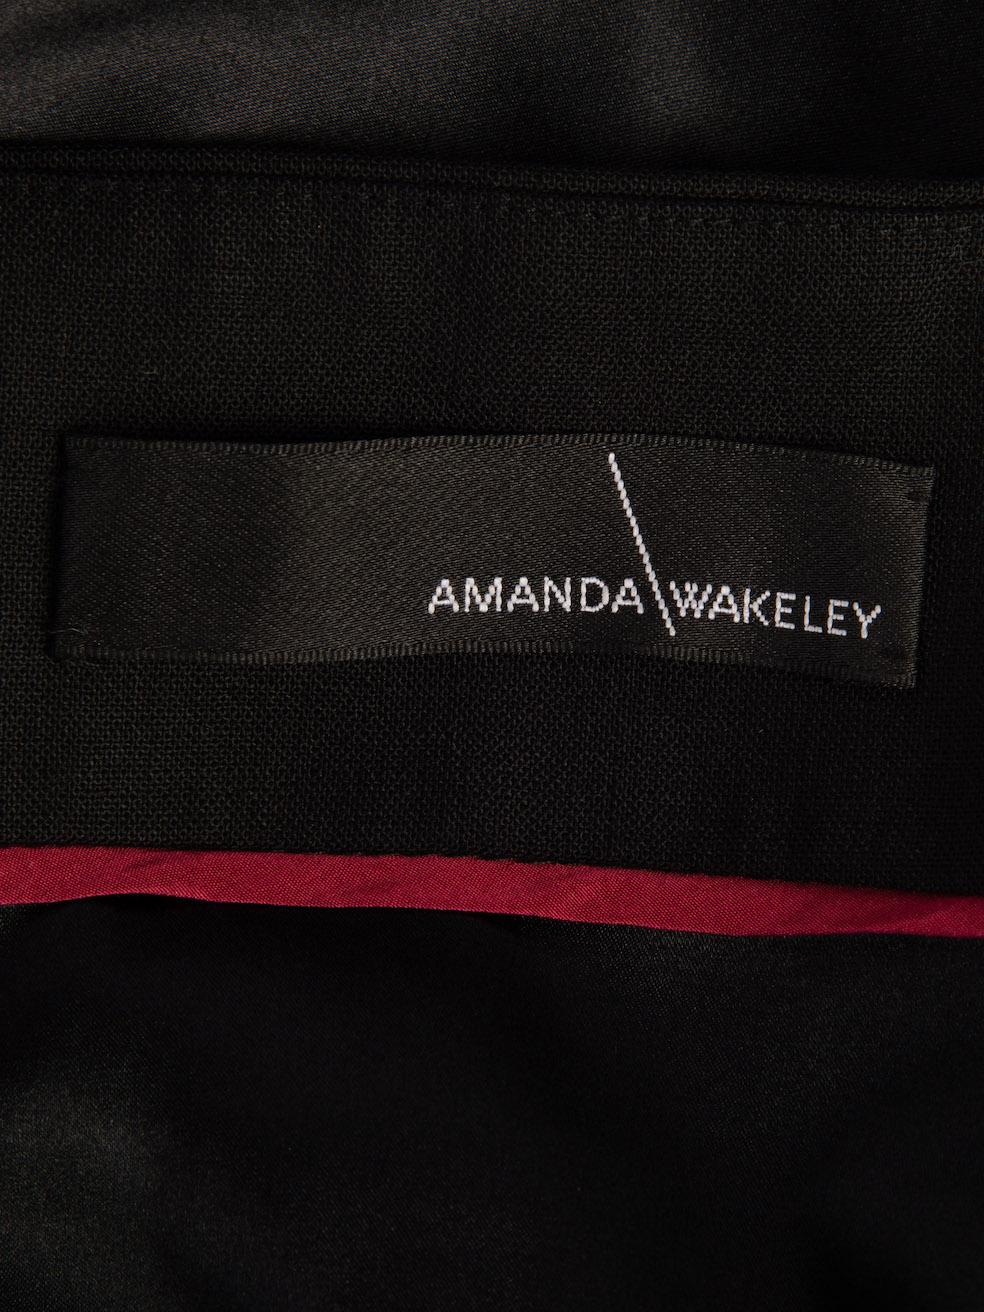 Pre-Loved Amanda Wakeley Women's Black Wool Fitted Pencil Skirt 2